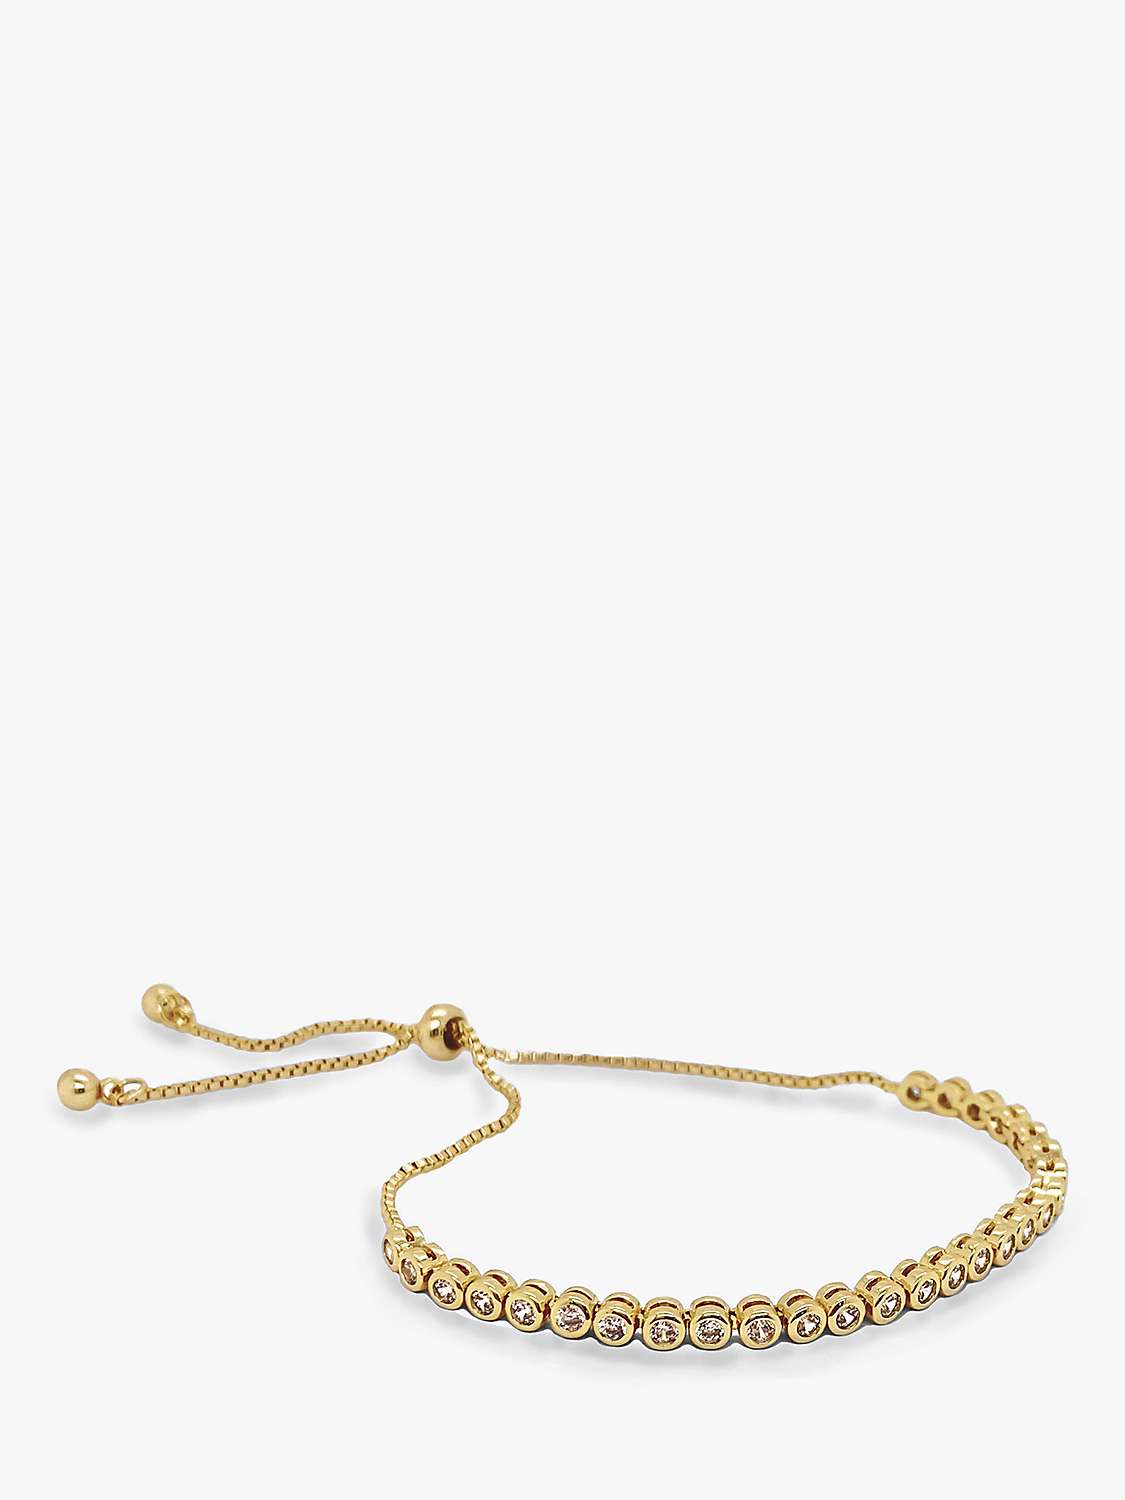 Buy Ivory & Co. Tivoli Tennis Chain Bracelet, Gold Online at johnlewis.com